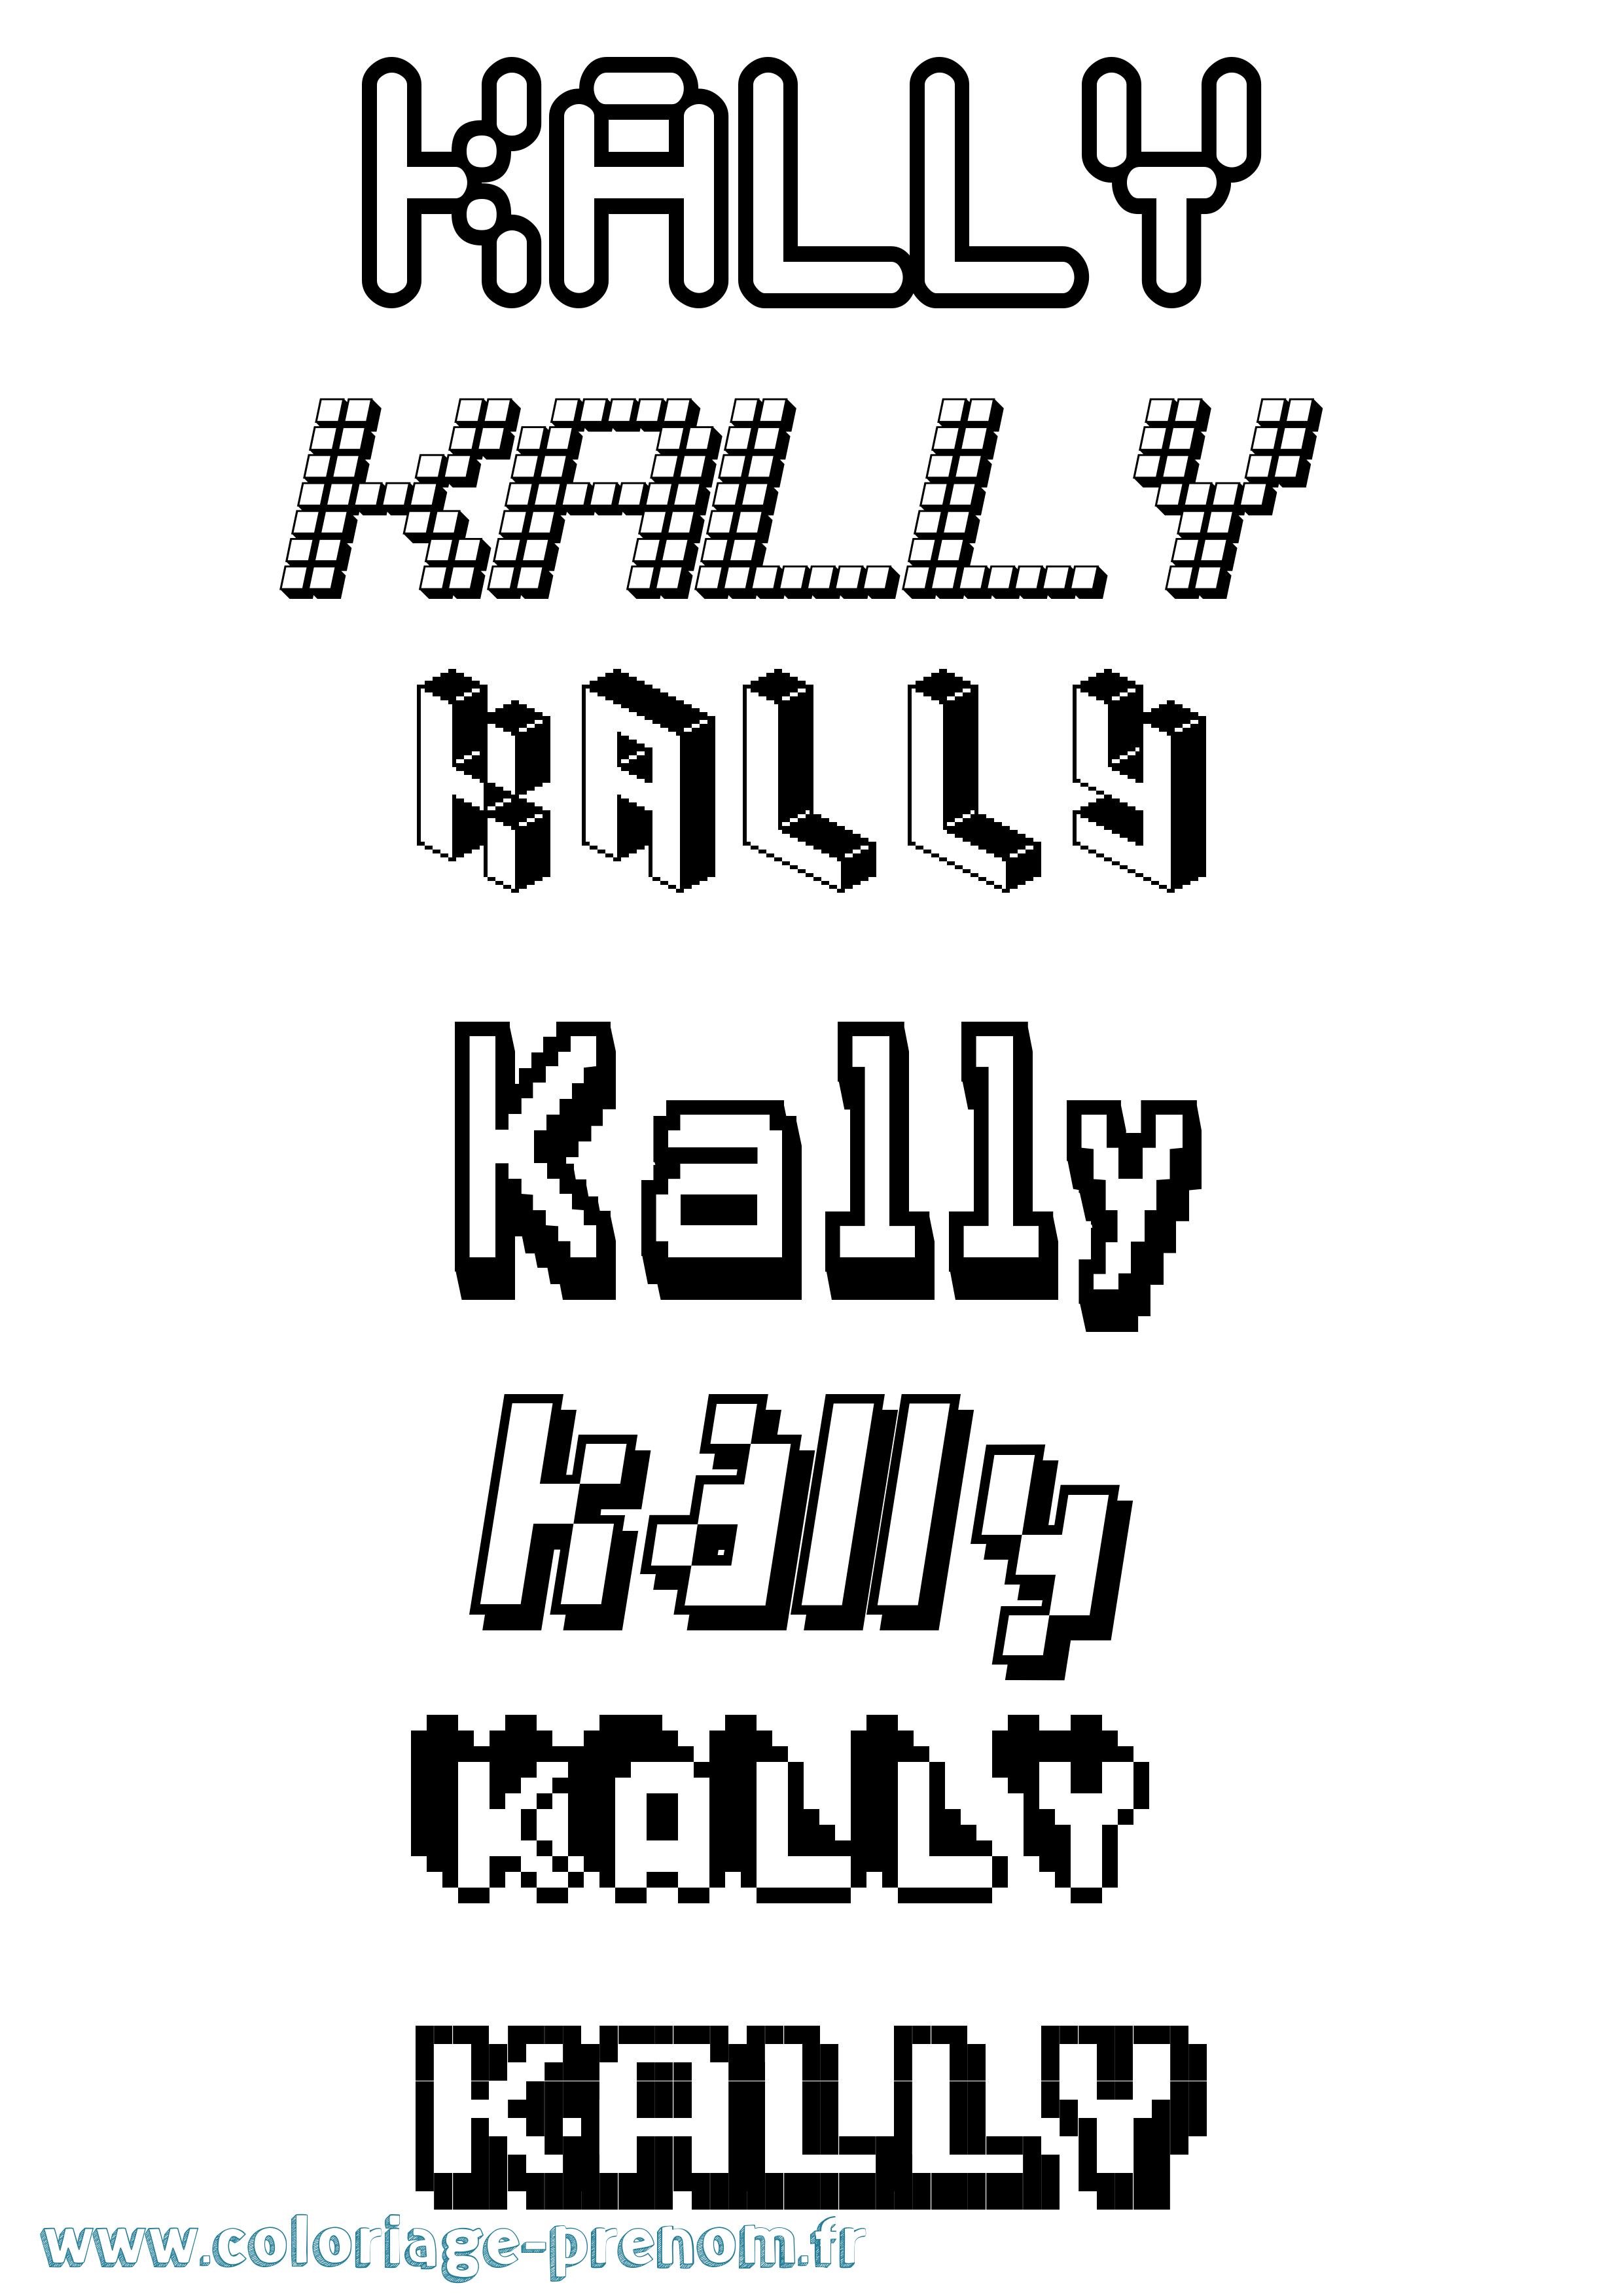 Coloriage prénom Kally Pixel